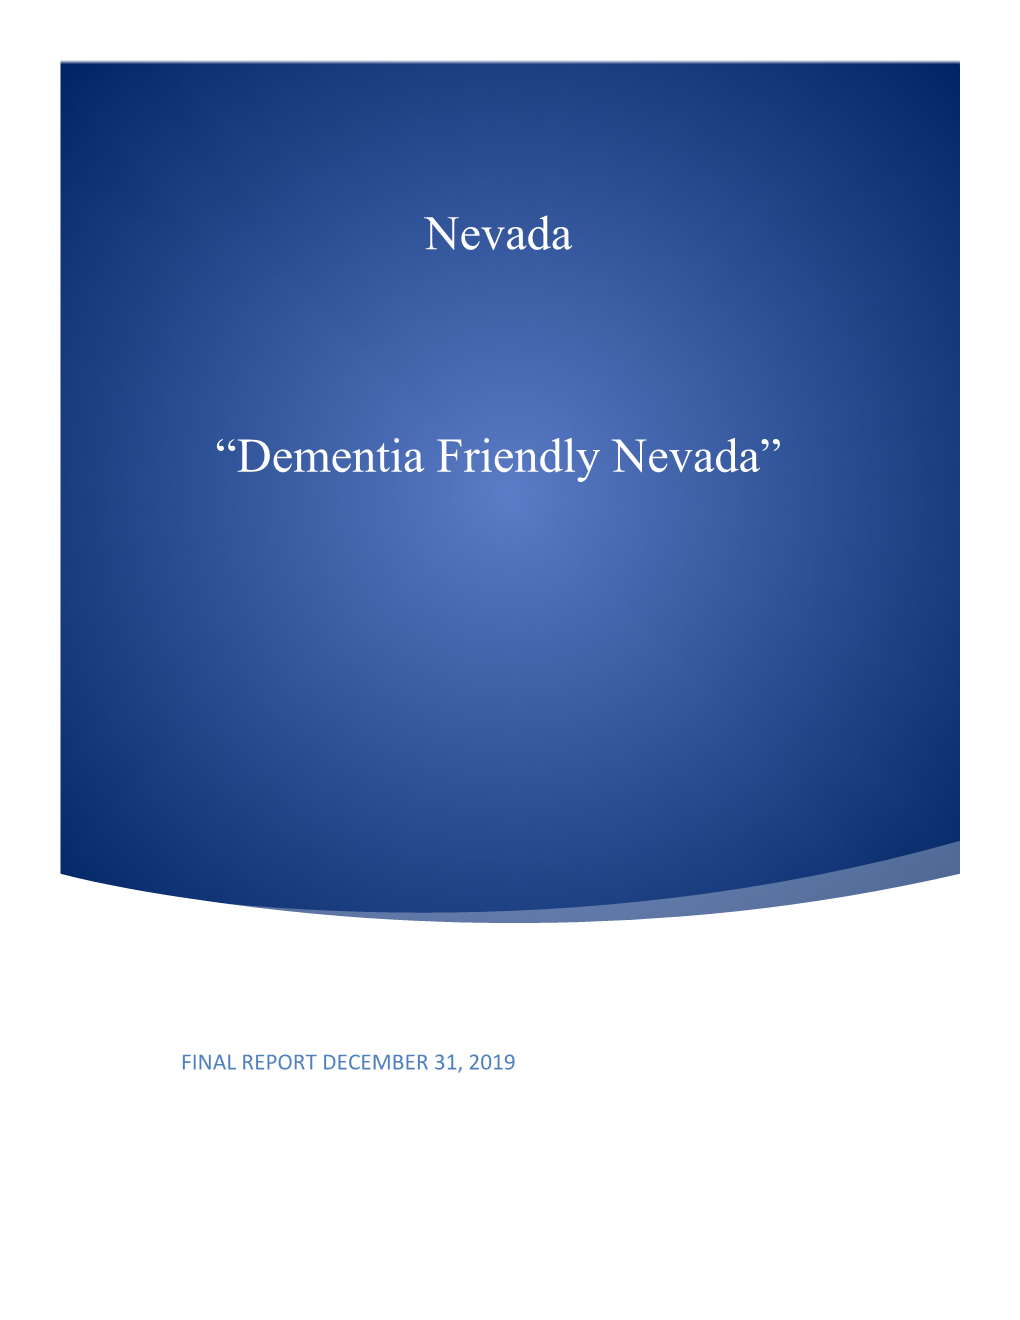 December 2019 Dementia Friendly Nevada Final Report